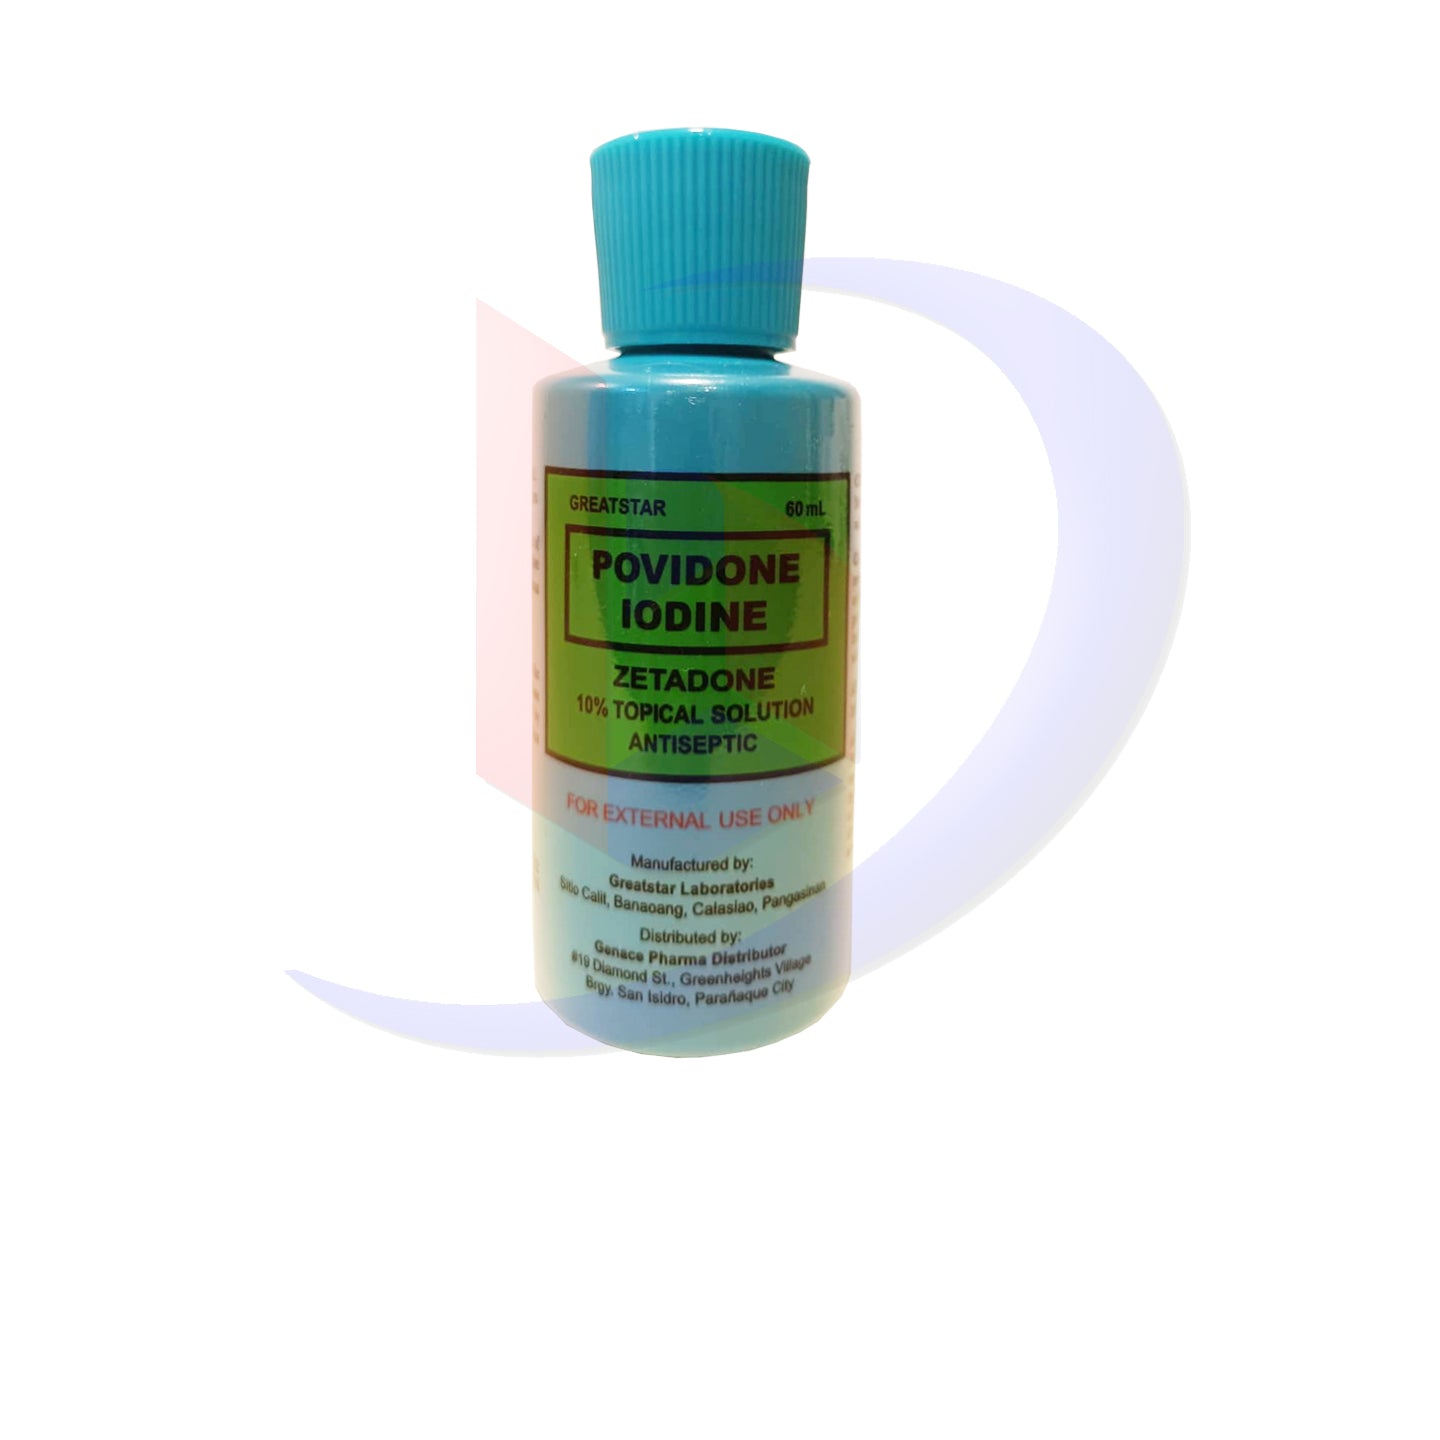 Povidone Iodine (Zetadone) 10% Solution Antiseptic Piece 1's 60m